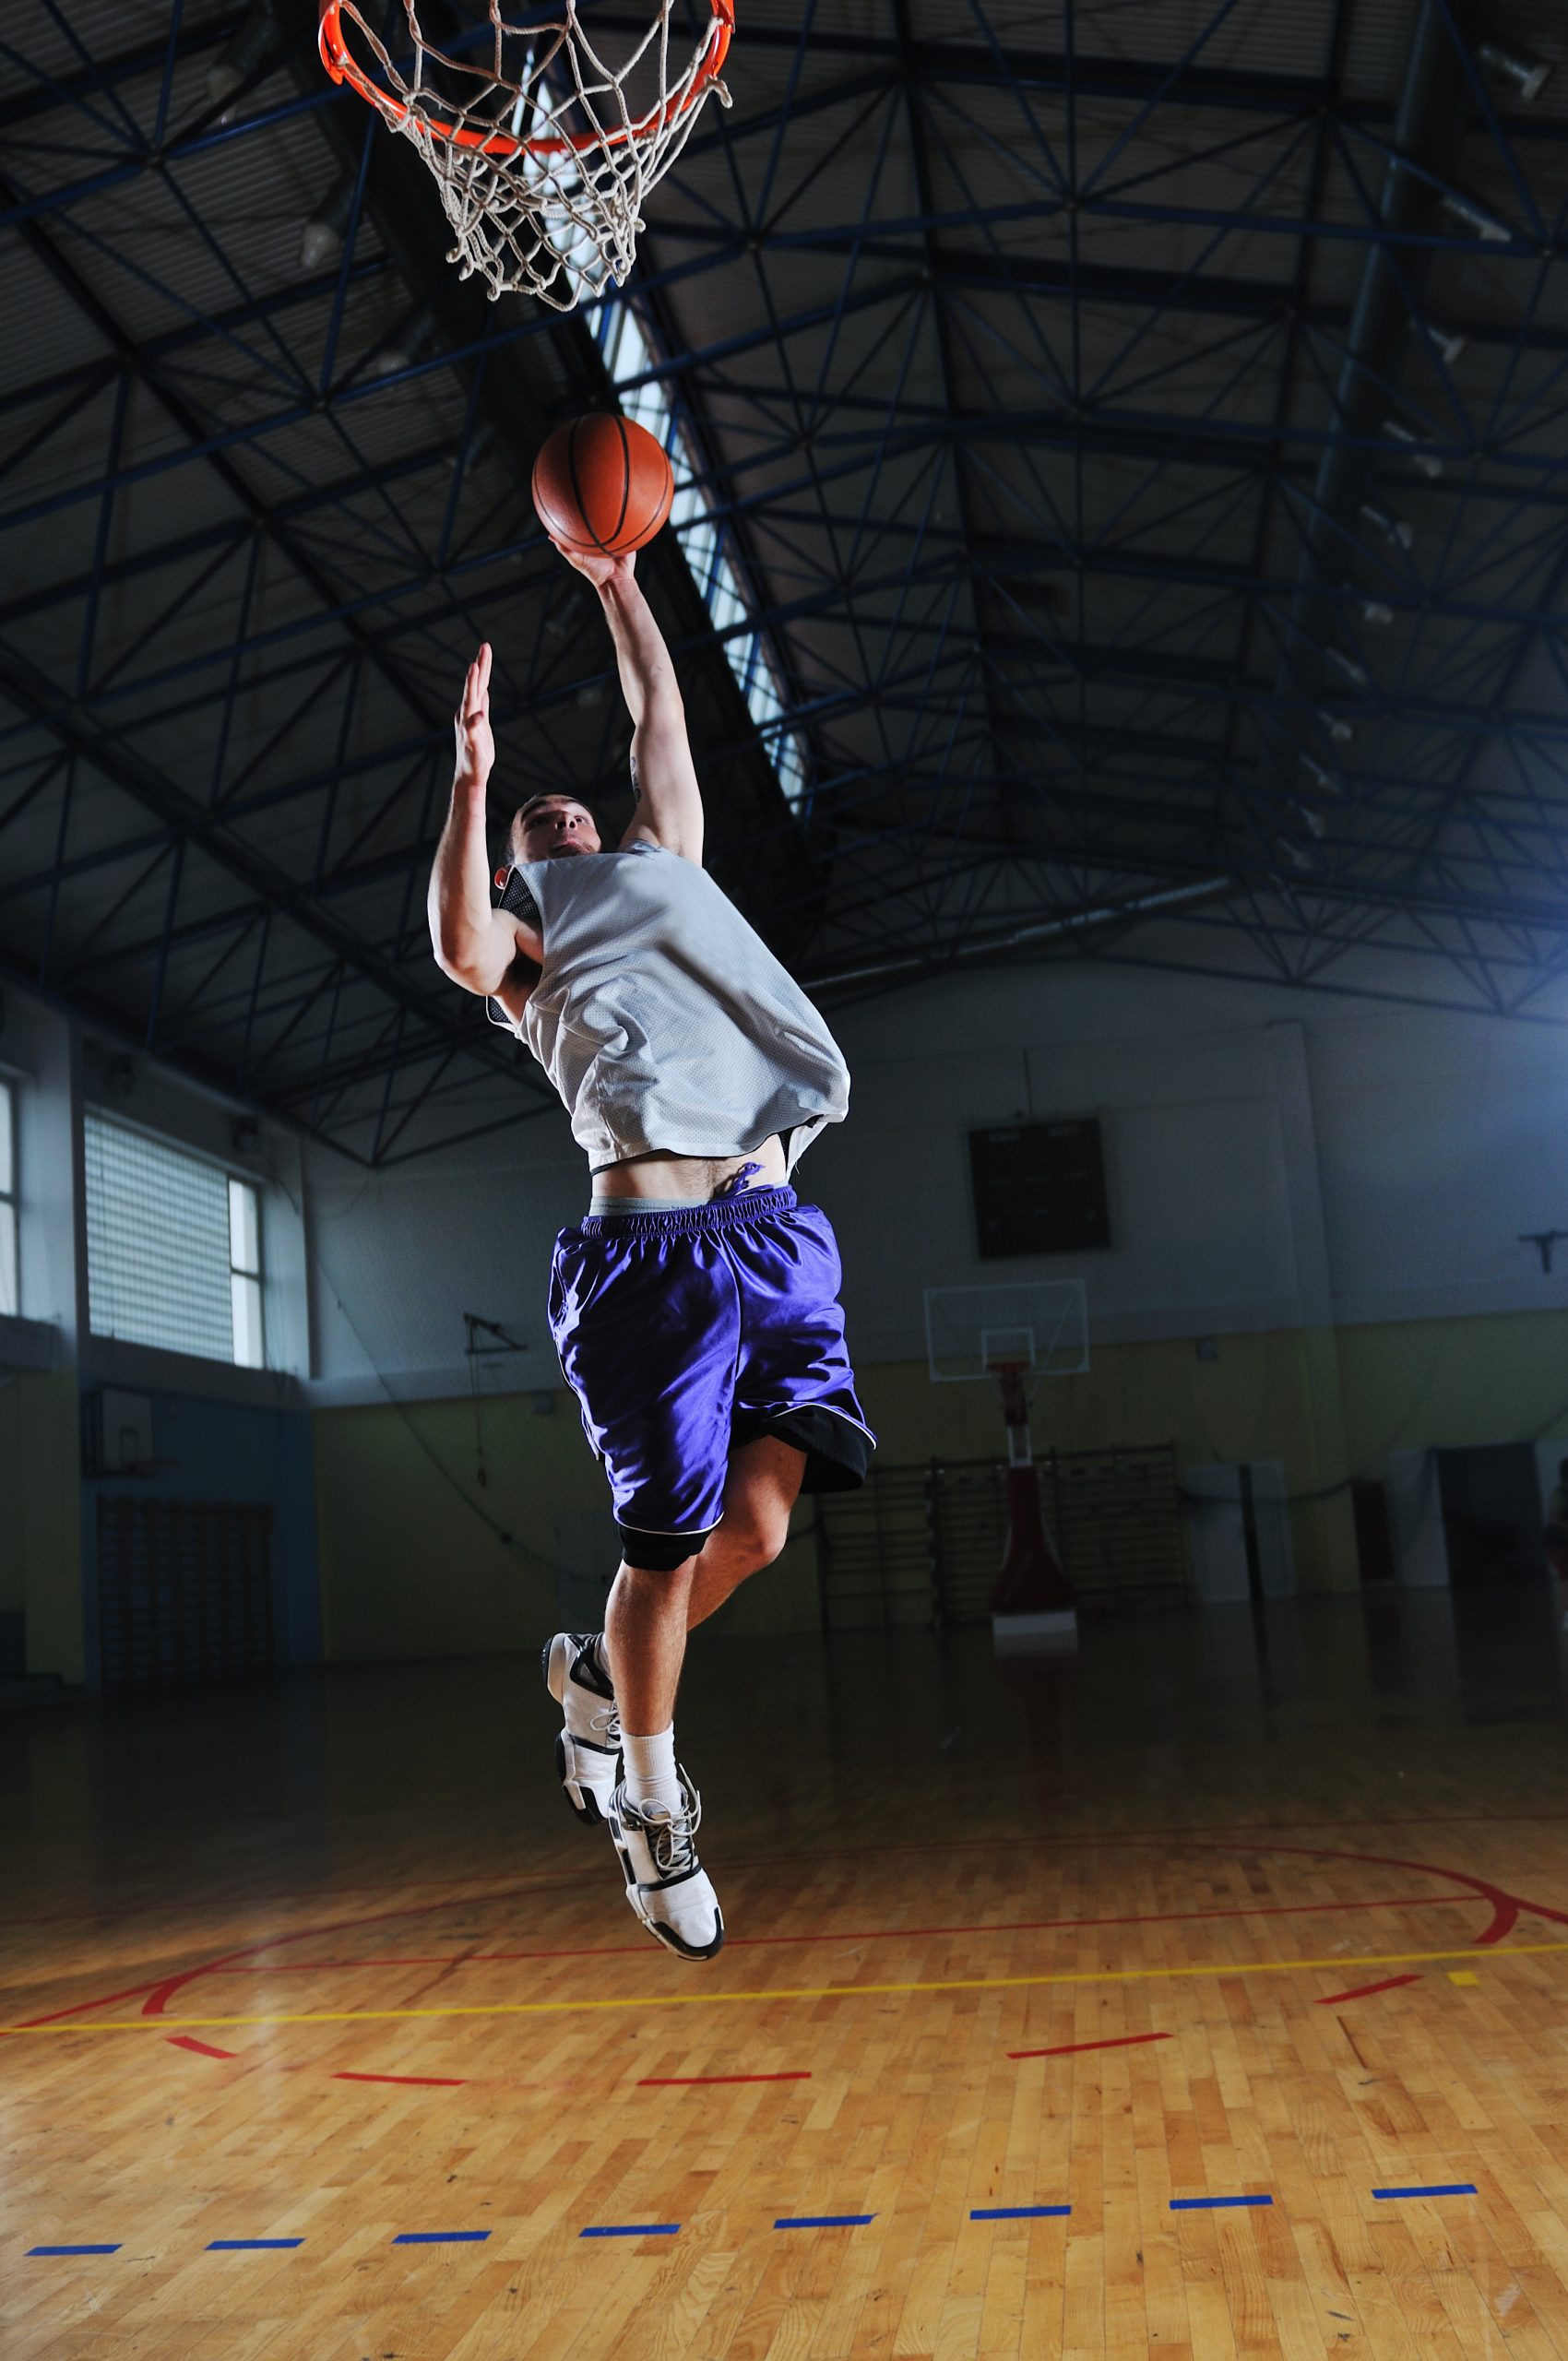 basket ball game player at sport hall